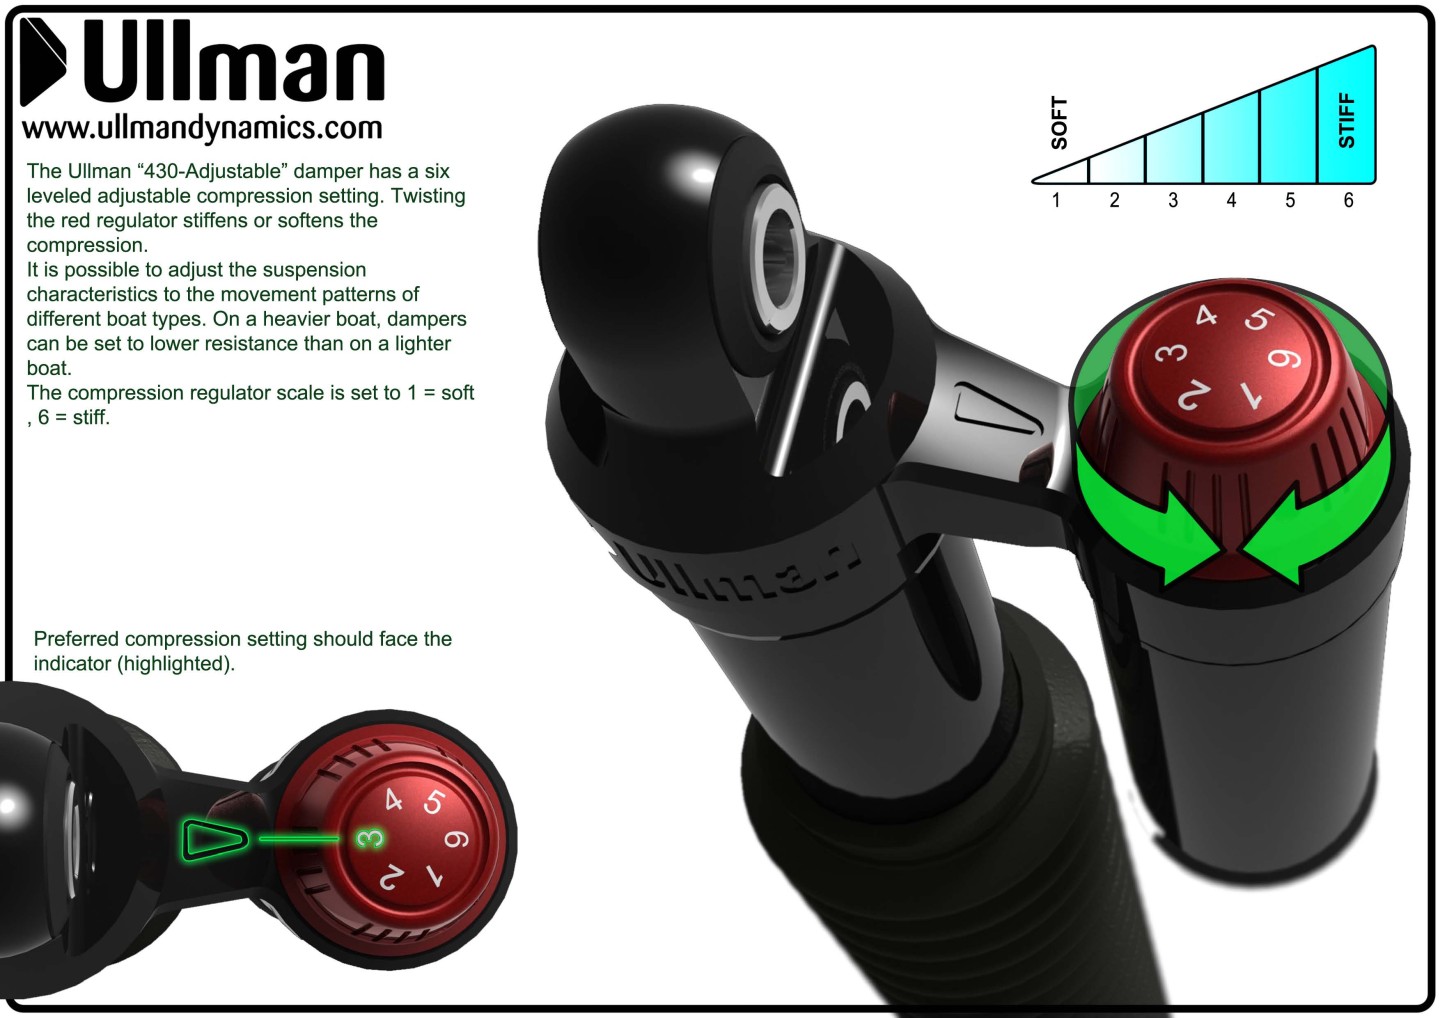 Ullman Adjustable Suspension "Damper" info